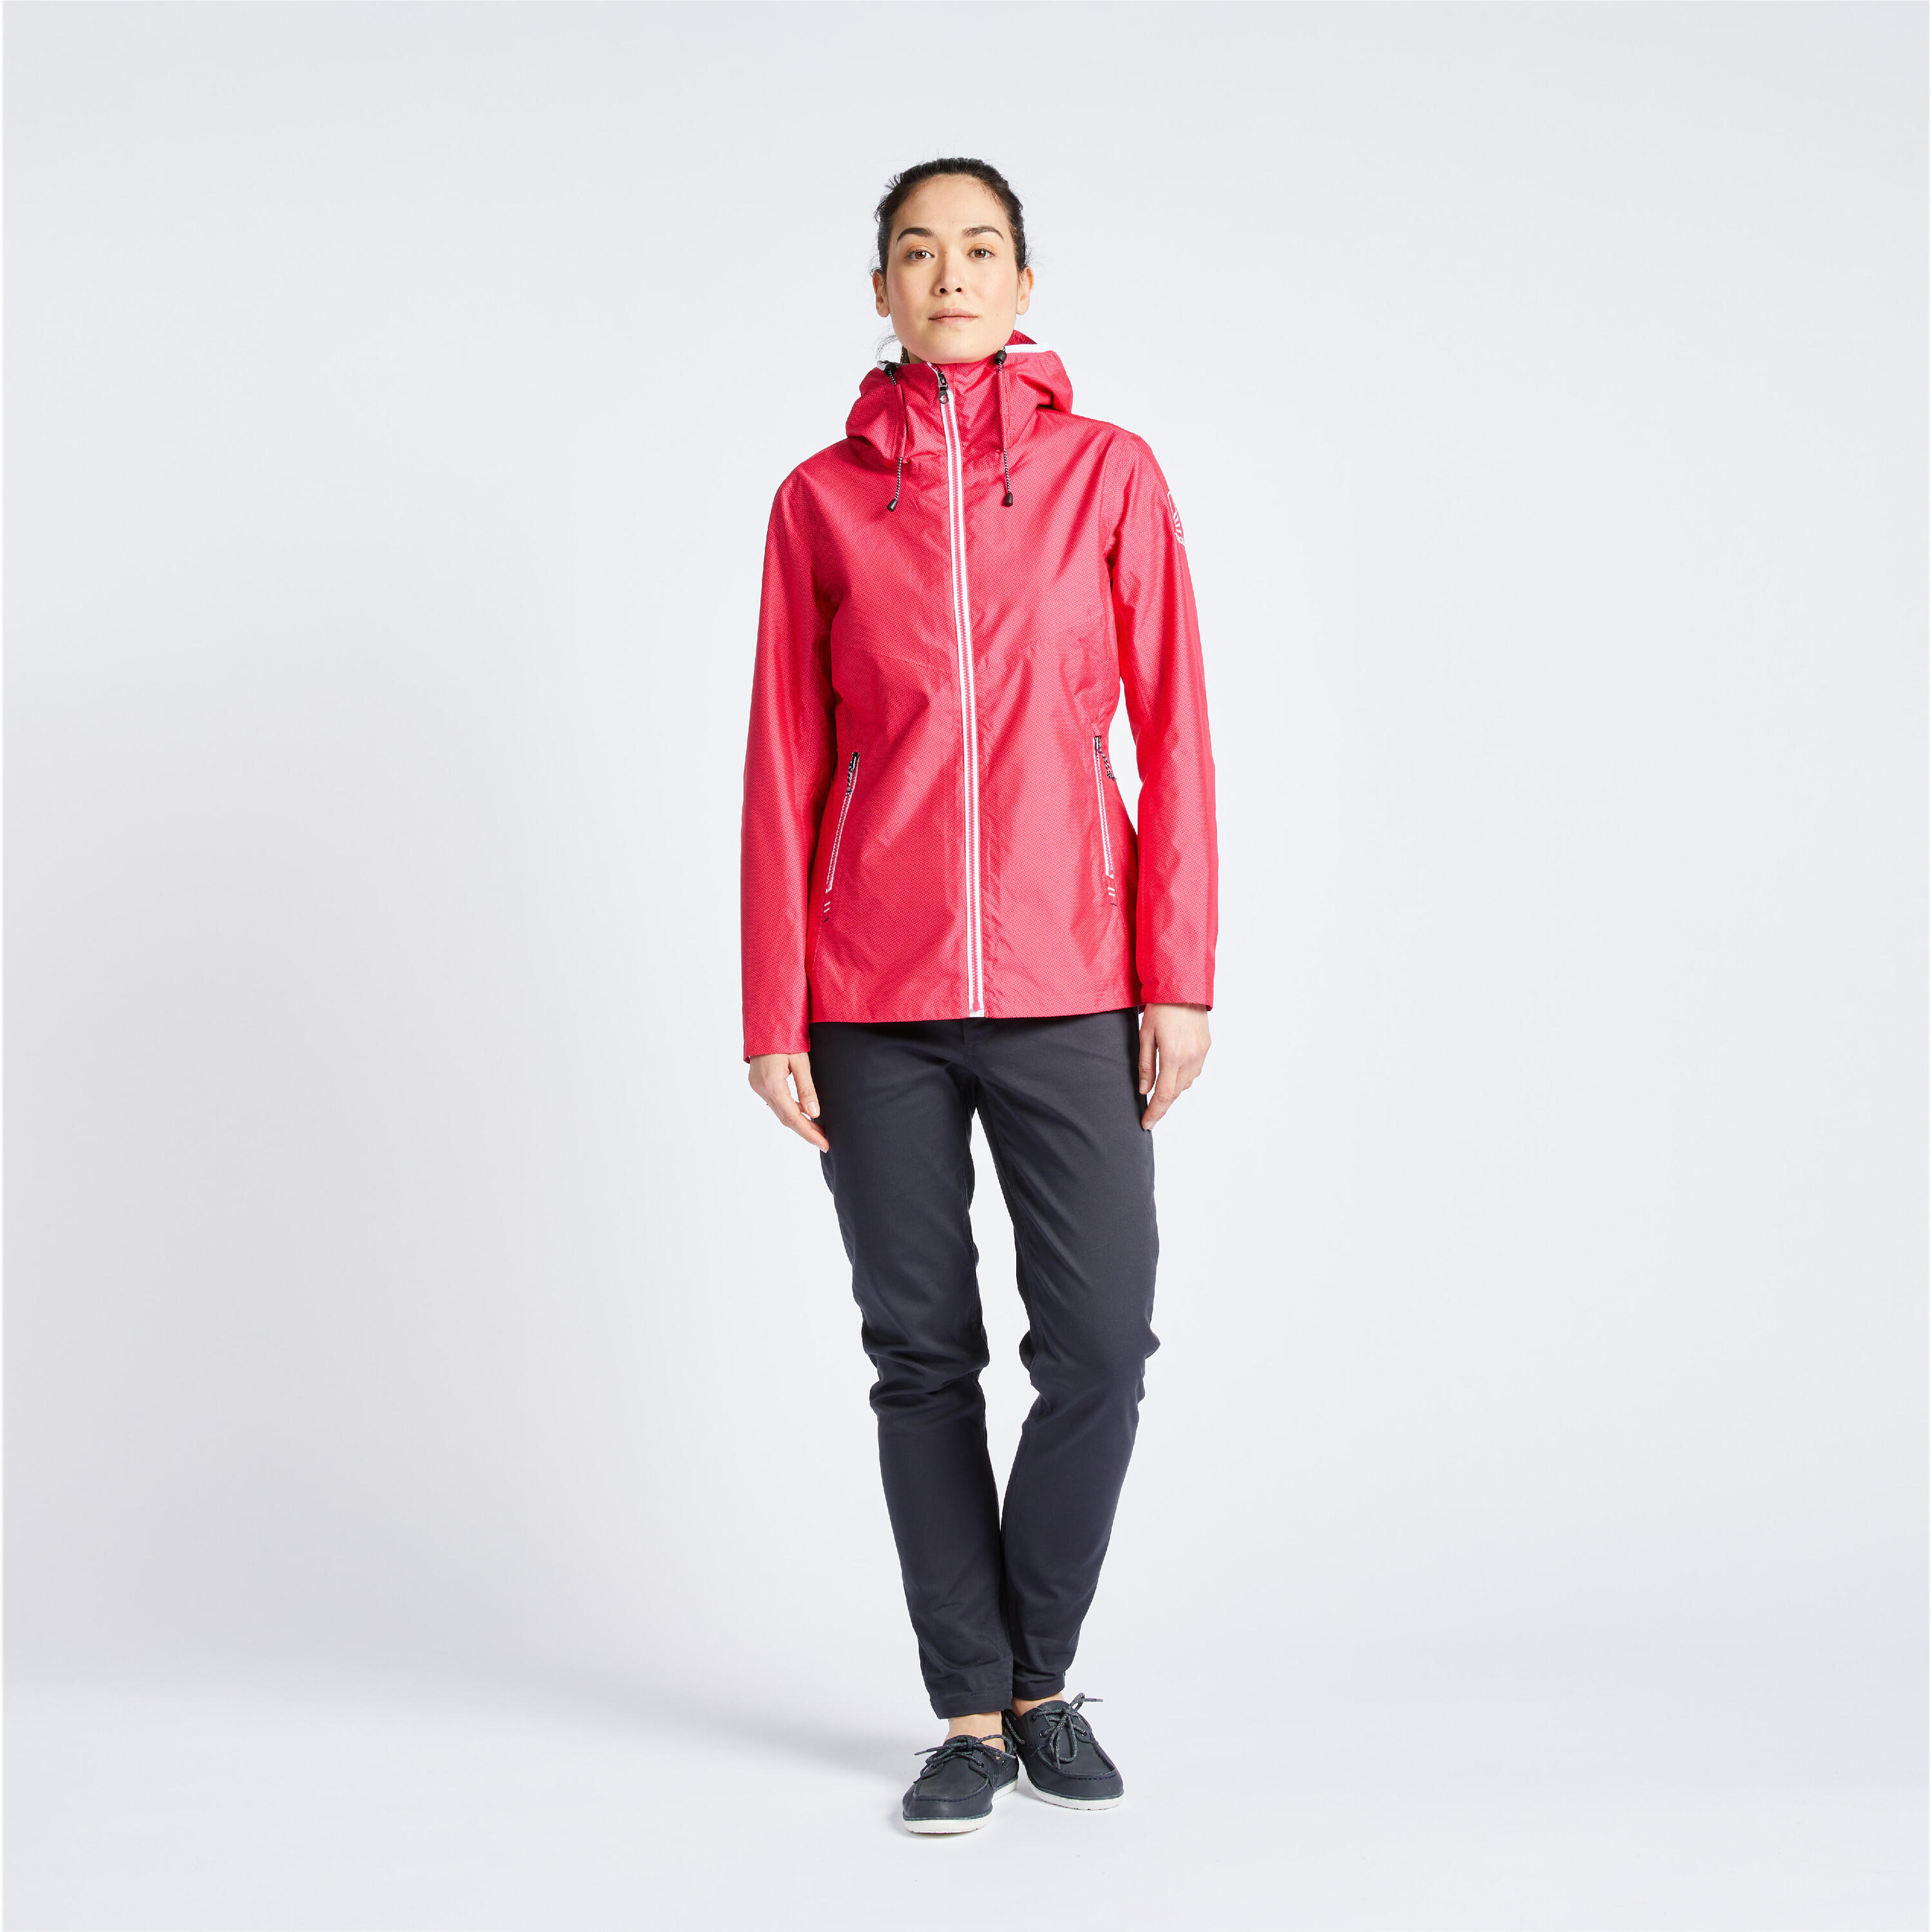 Women's waterproof sailing jacket 100 - All Over Pink 9/9